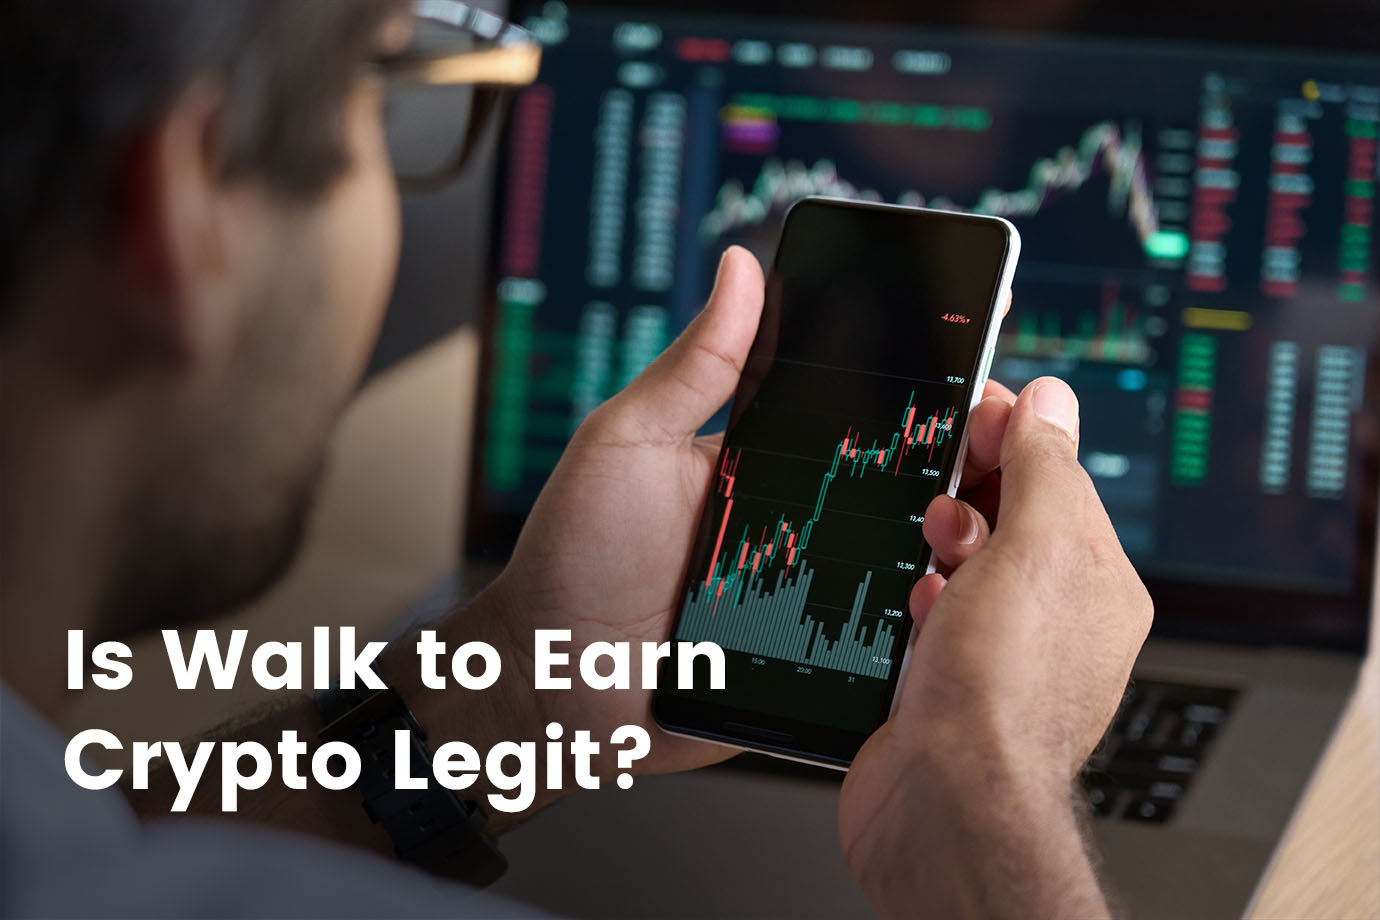 earn crypto by walking